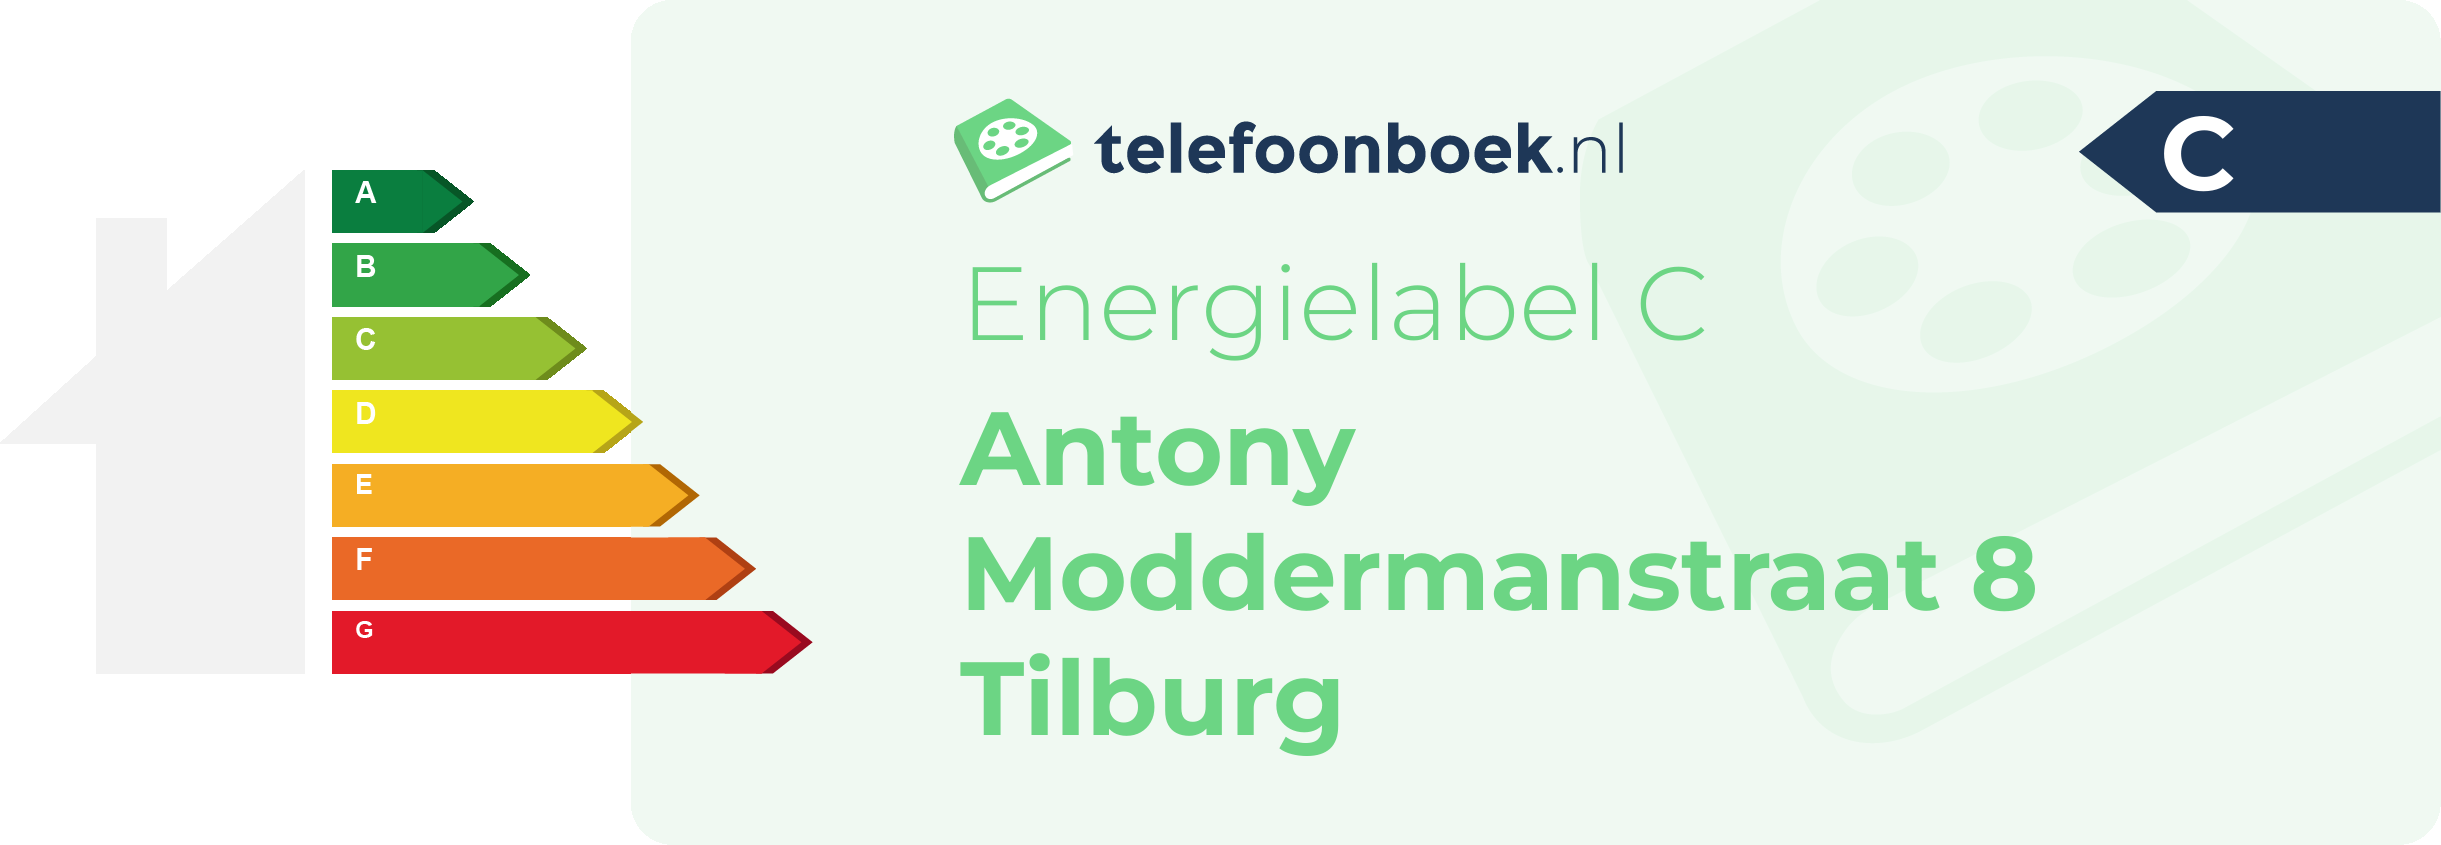 Energielabel Antony Moddermanstraat 8 Tilburg